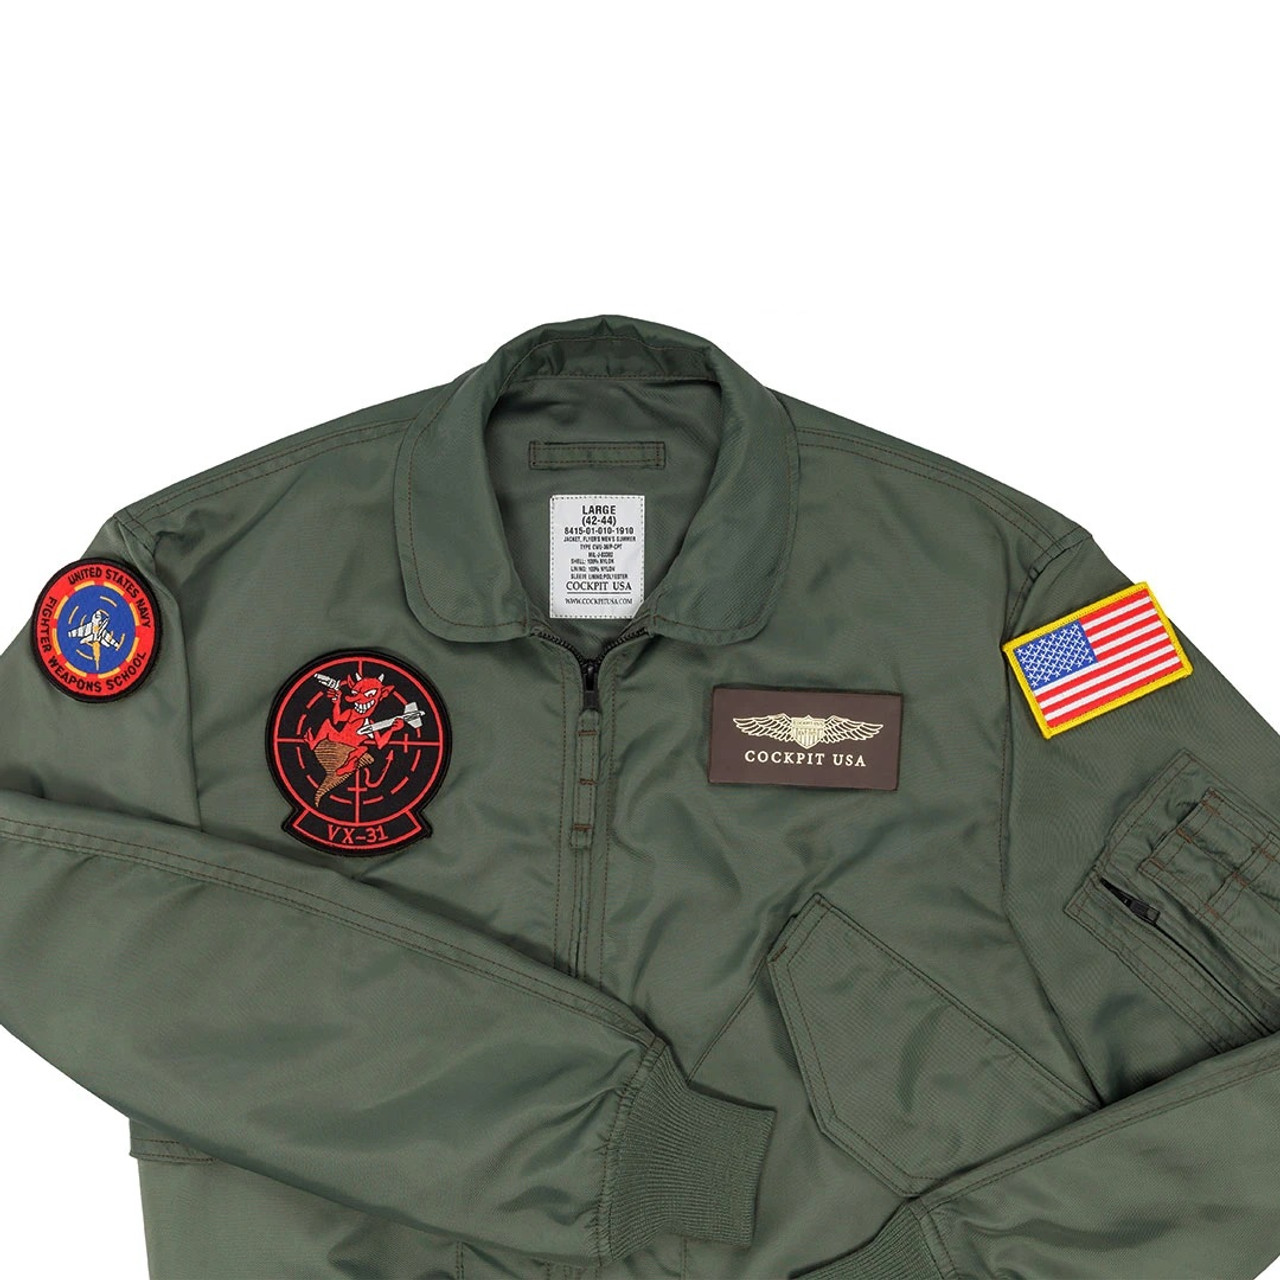 Cockpit USA “Movie Heroes” CWU-36/P Flight Jacket USA Made